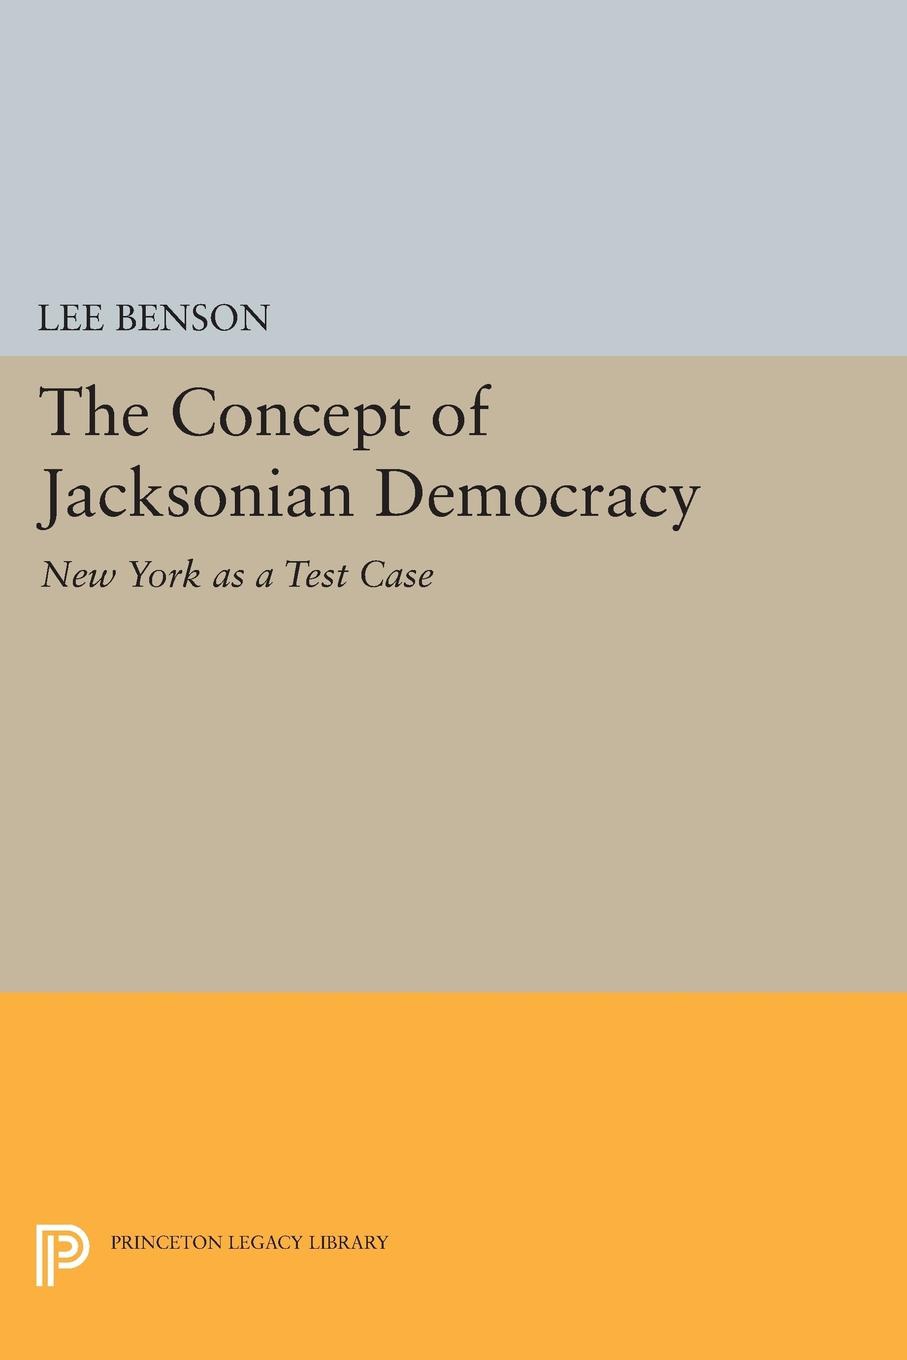 Jeffersonian Democracy Vs Jacksonian Democracy Chart